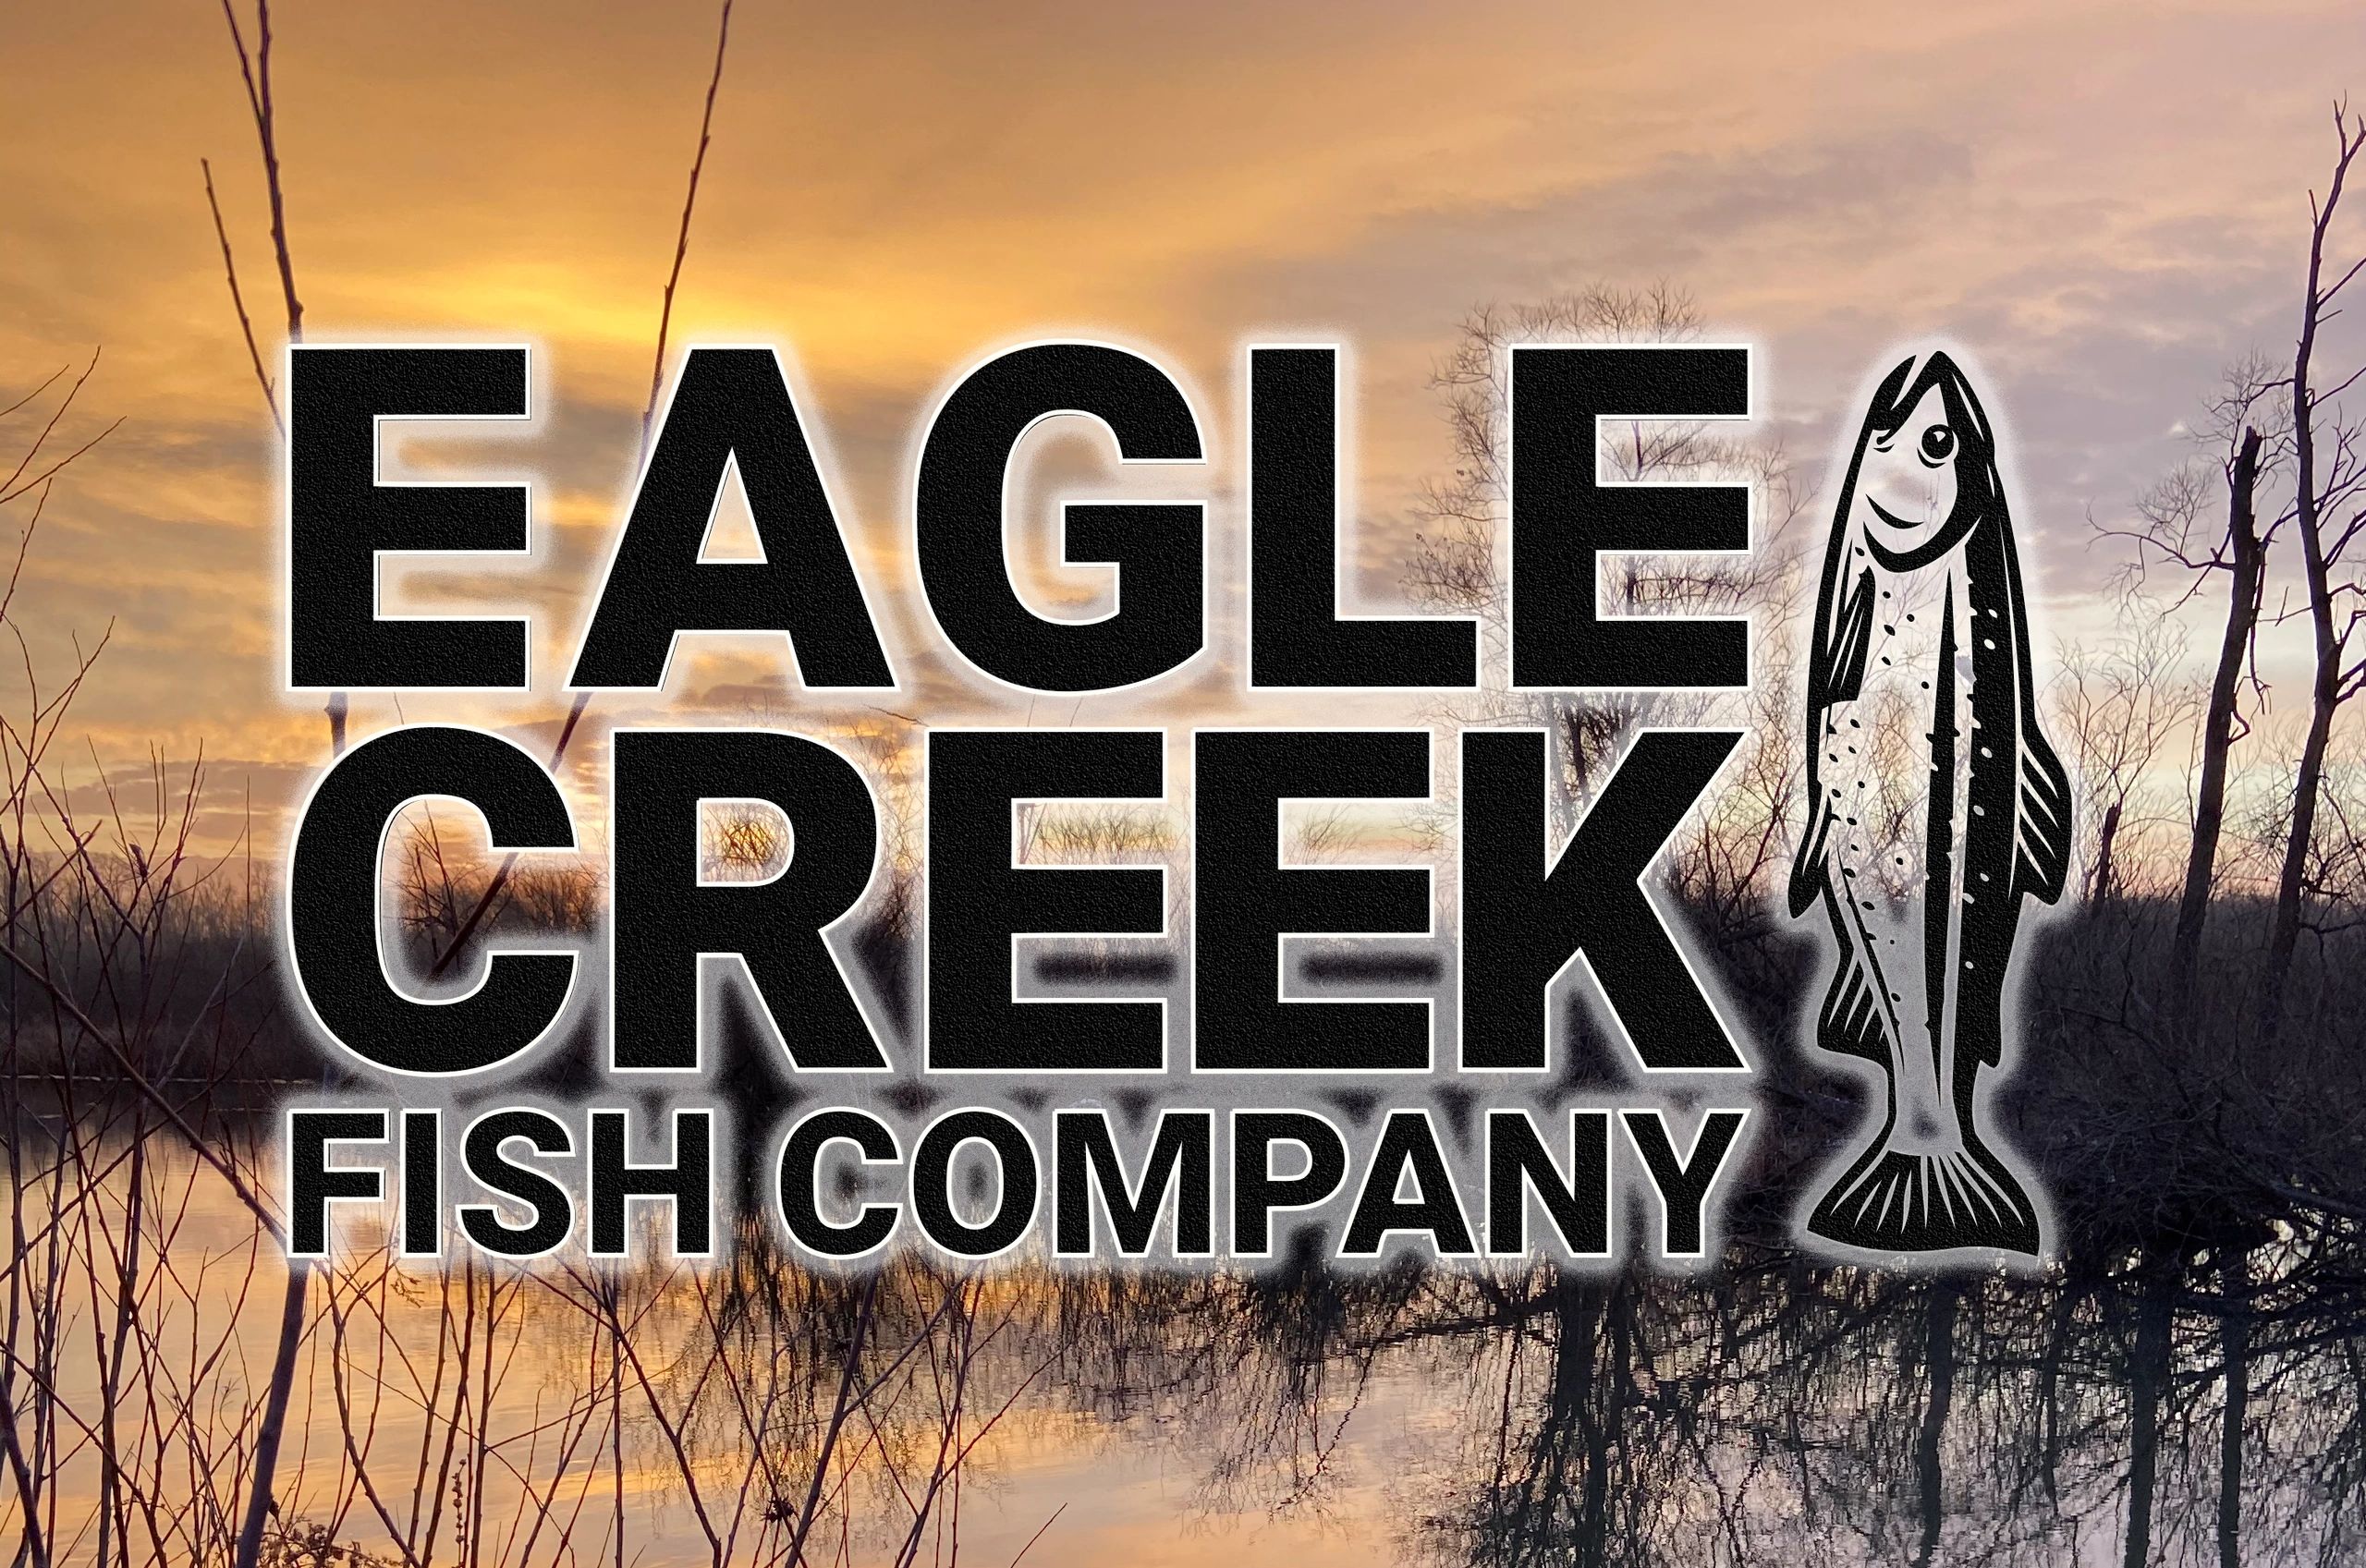 Brand: Eagle Creek